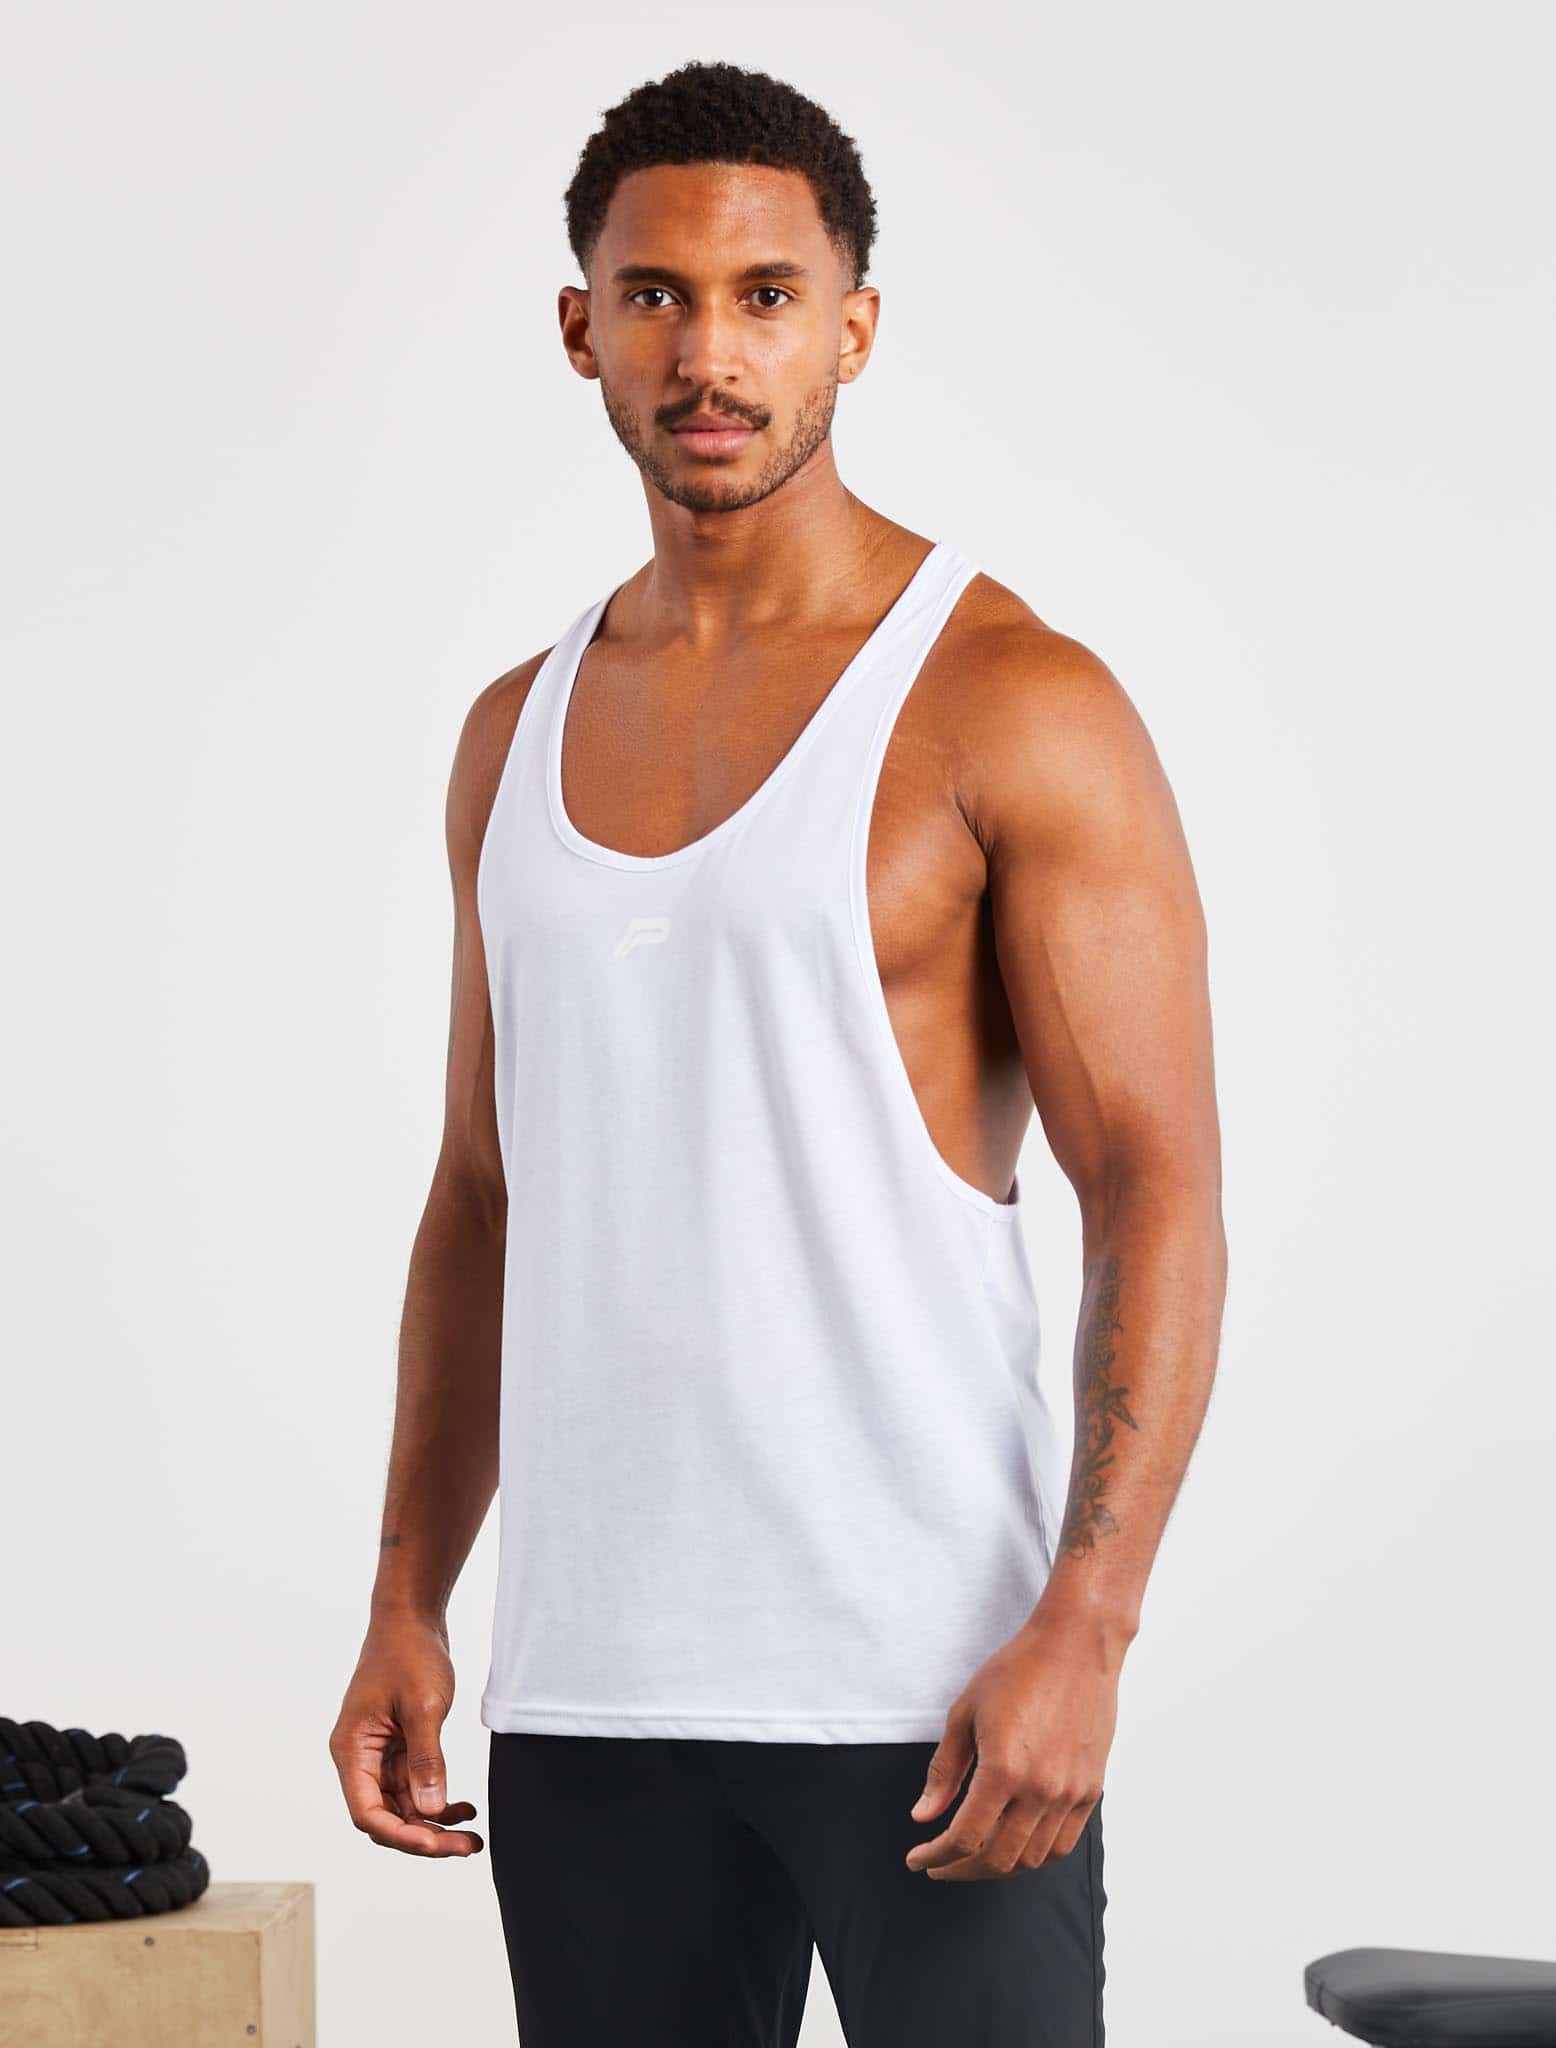 Icon Stringer Vest / White Pursue Fitness 1